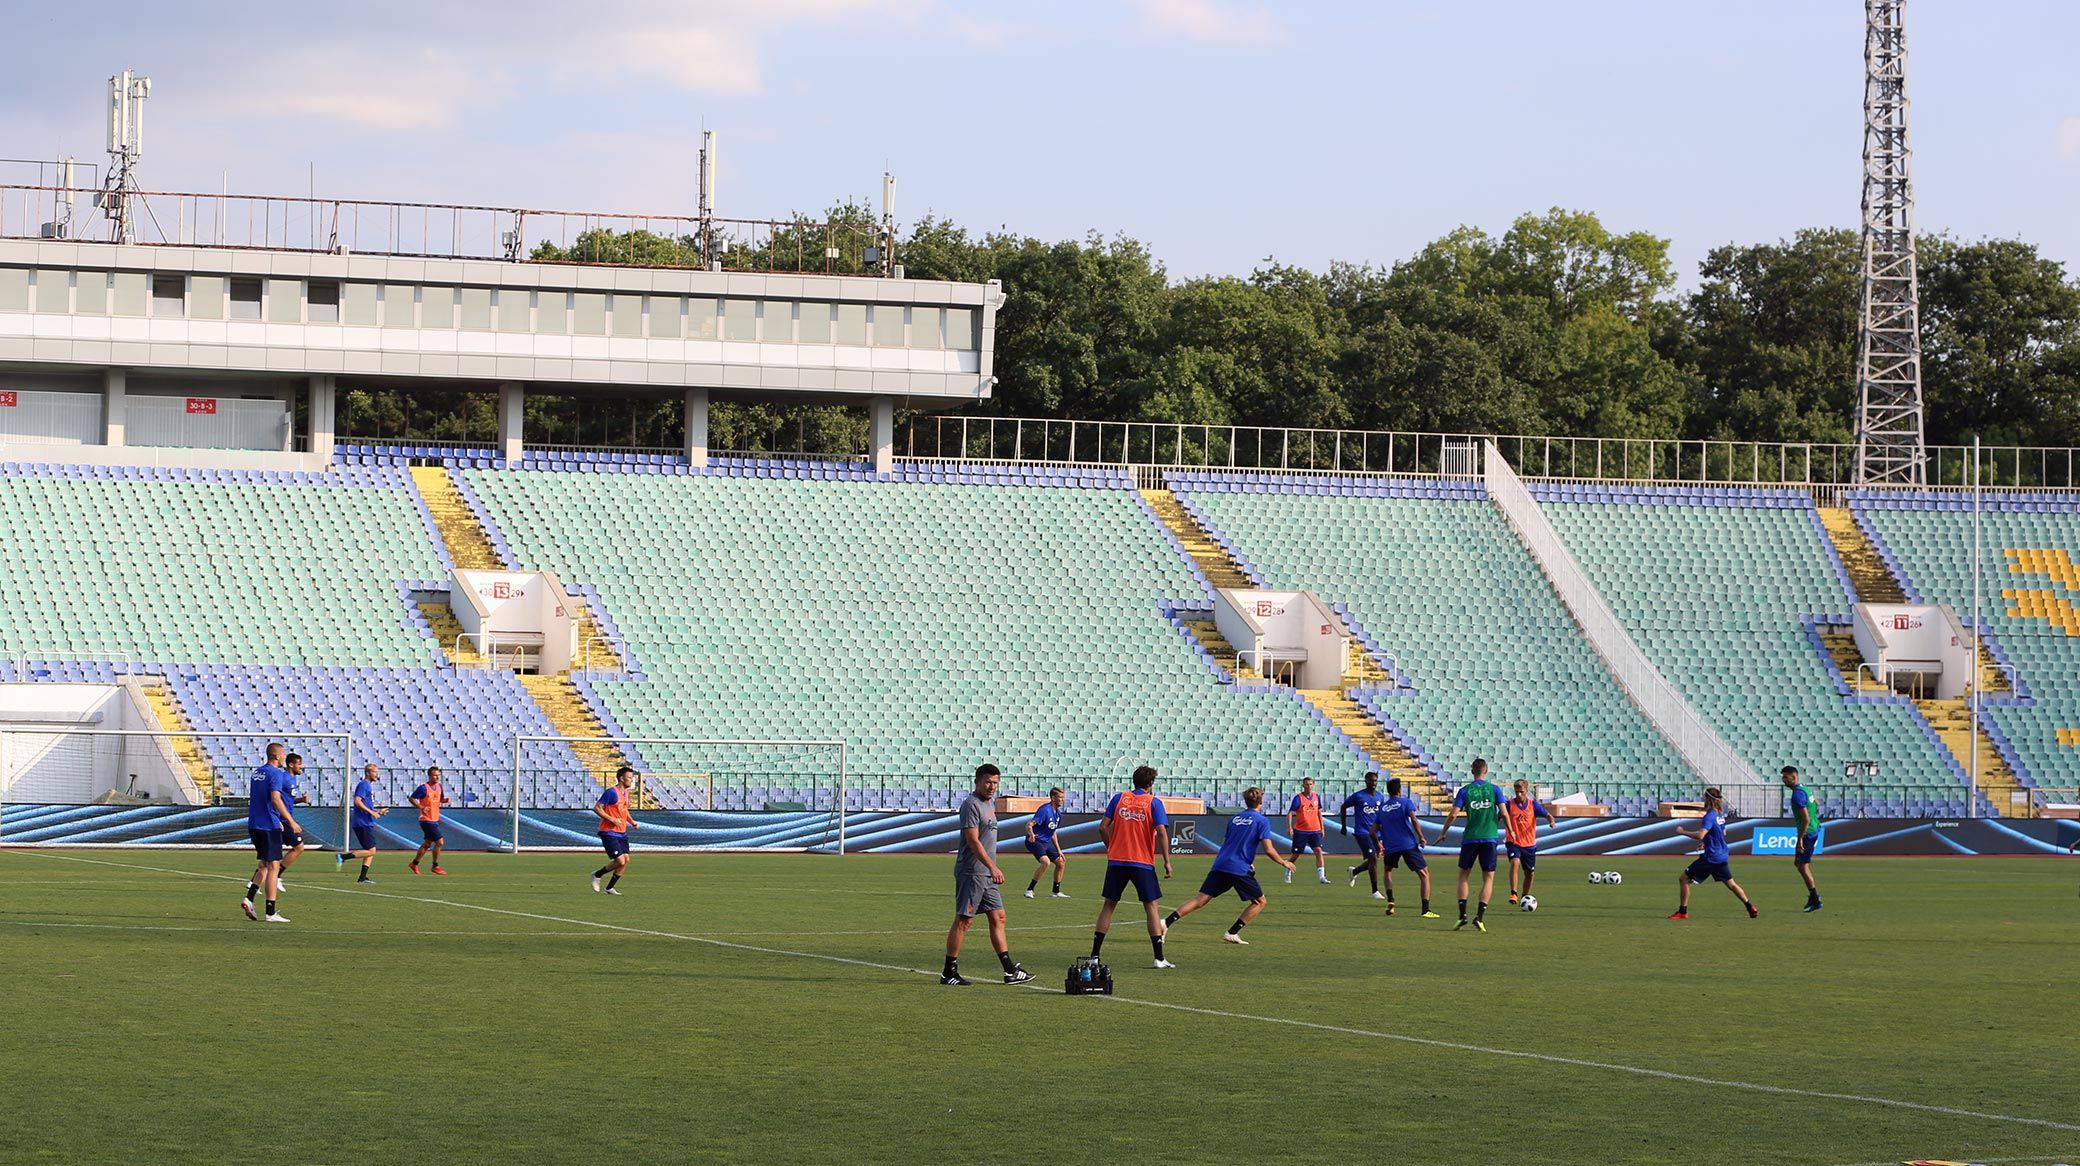 Natsionalen Stadion Vasil Levsk